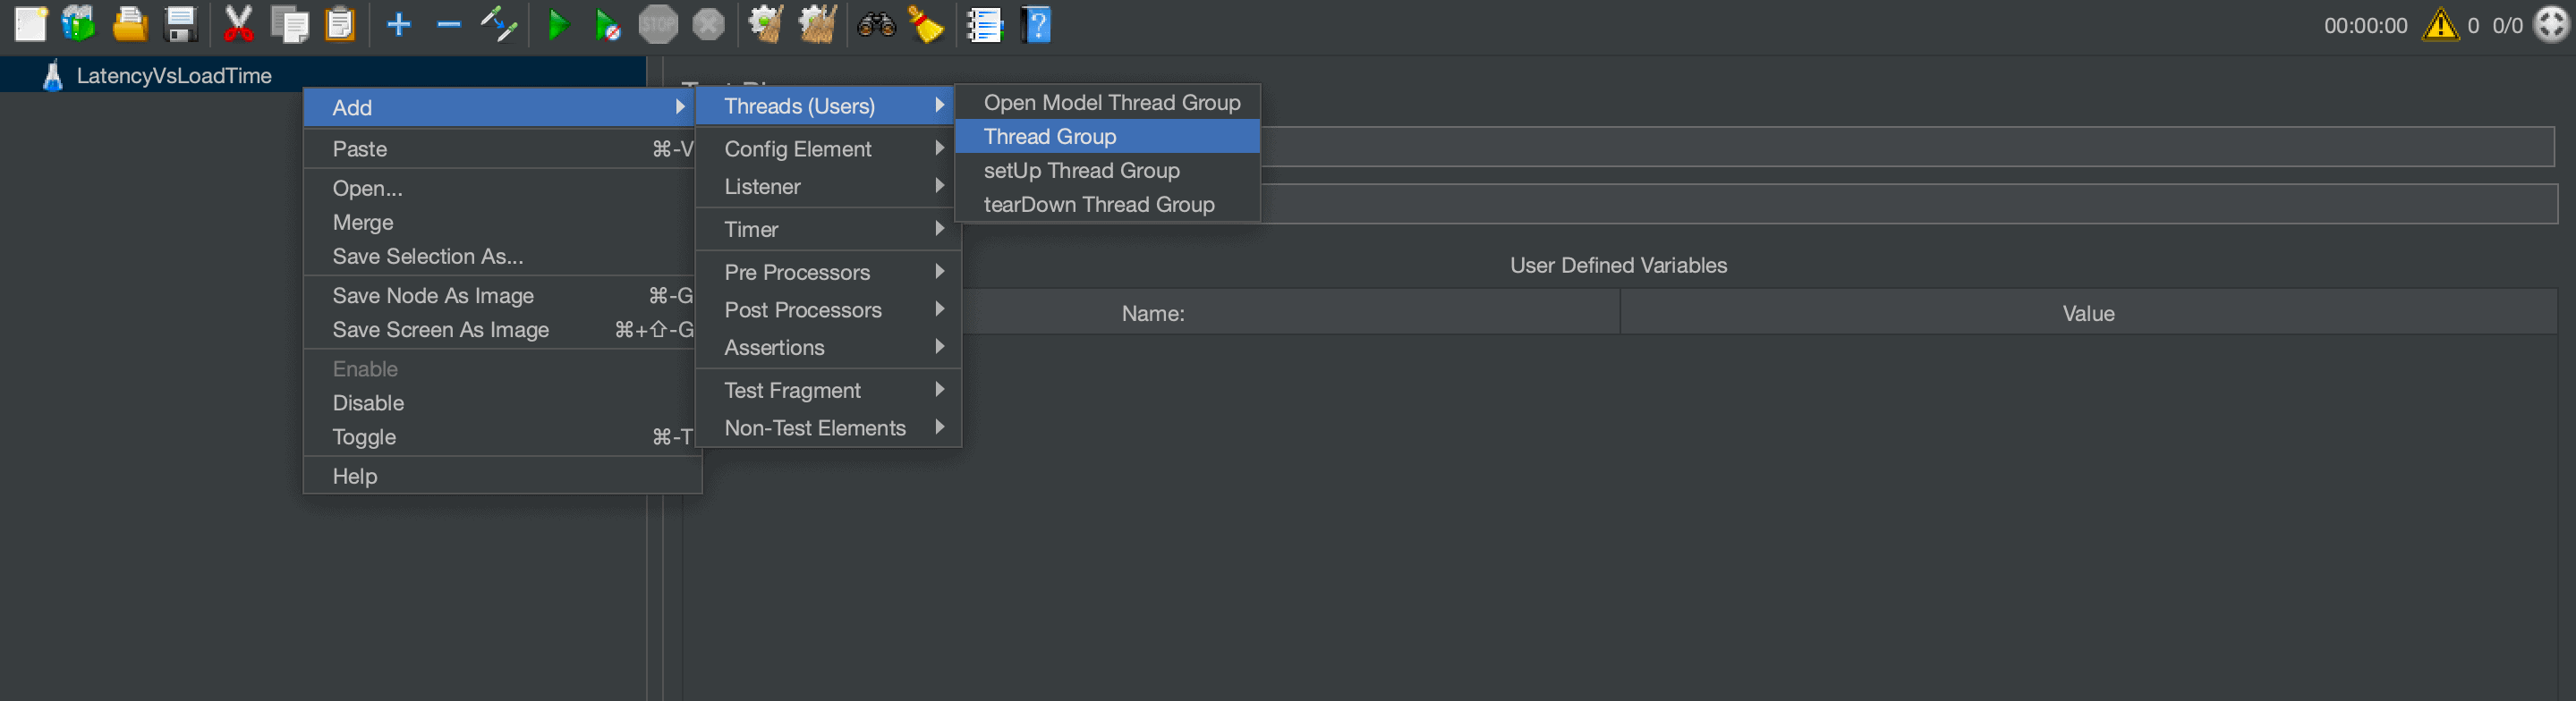 JMeter screenshot on how to create a Thread Group